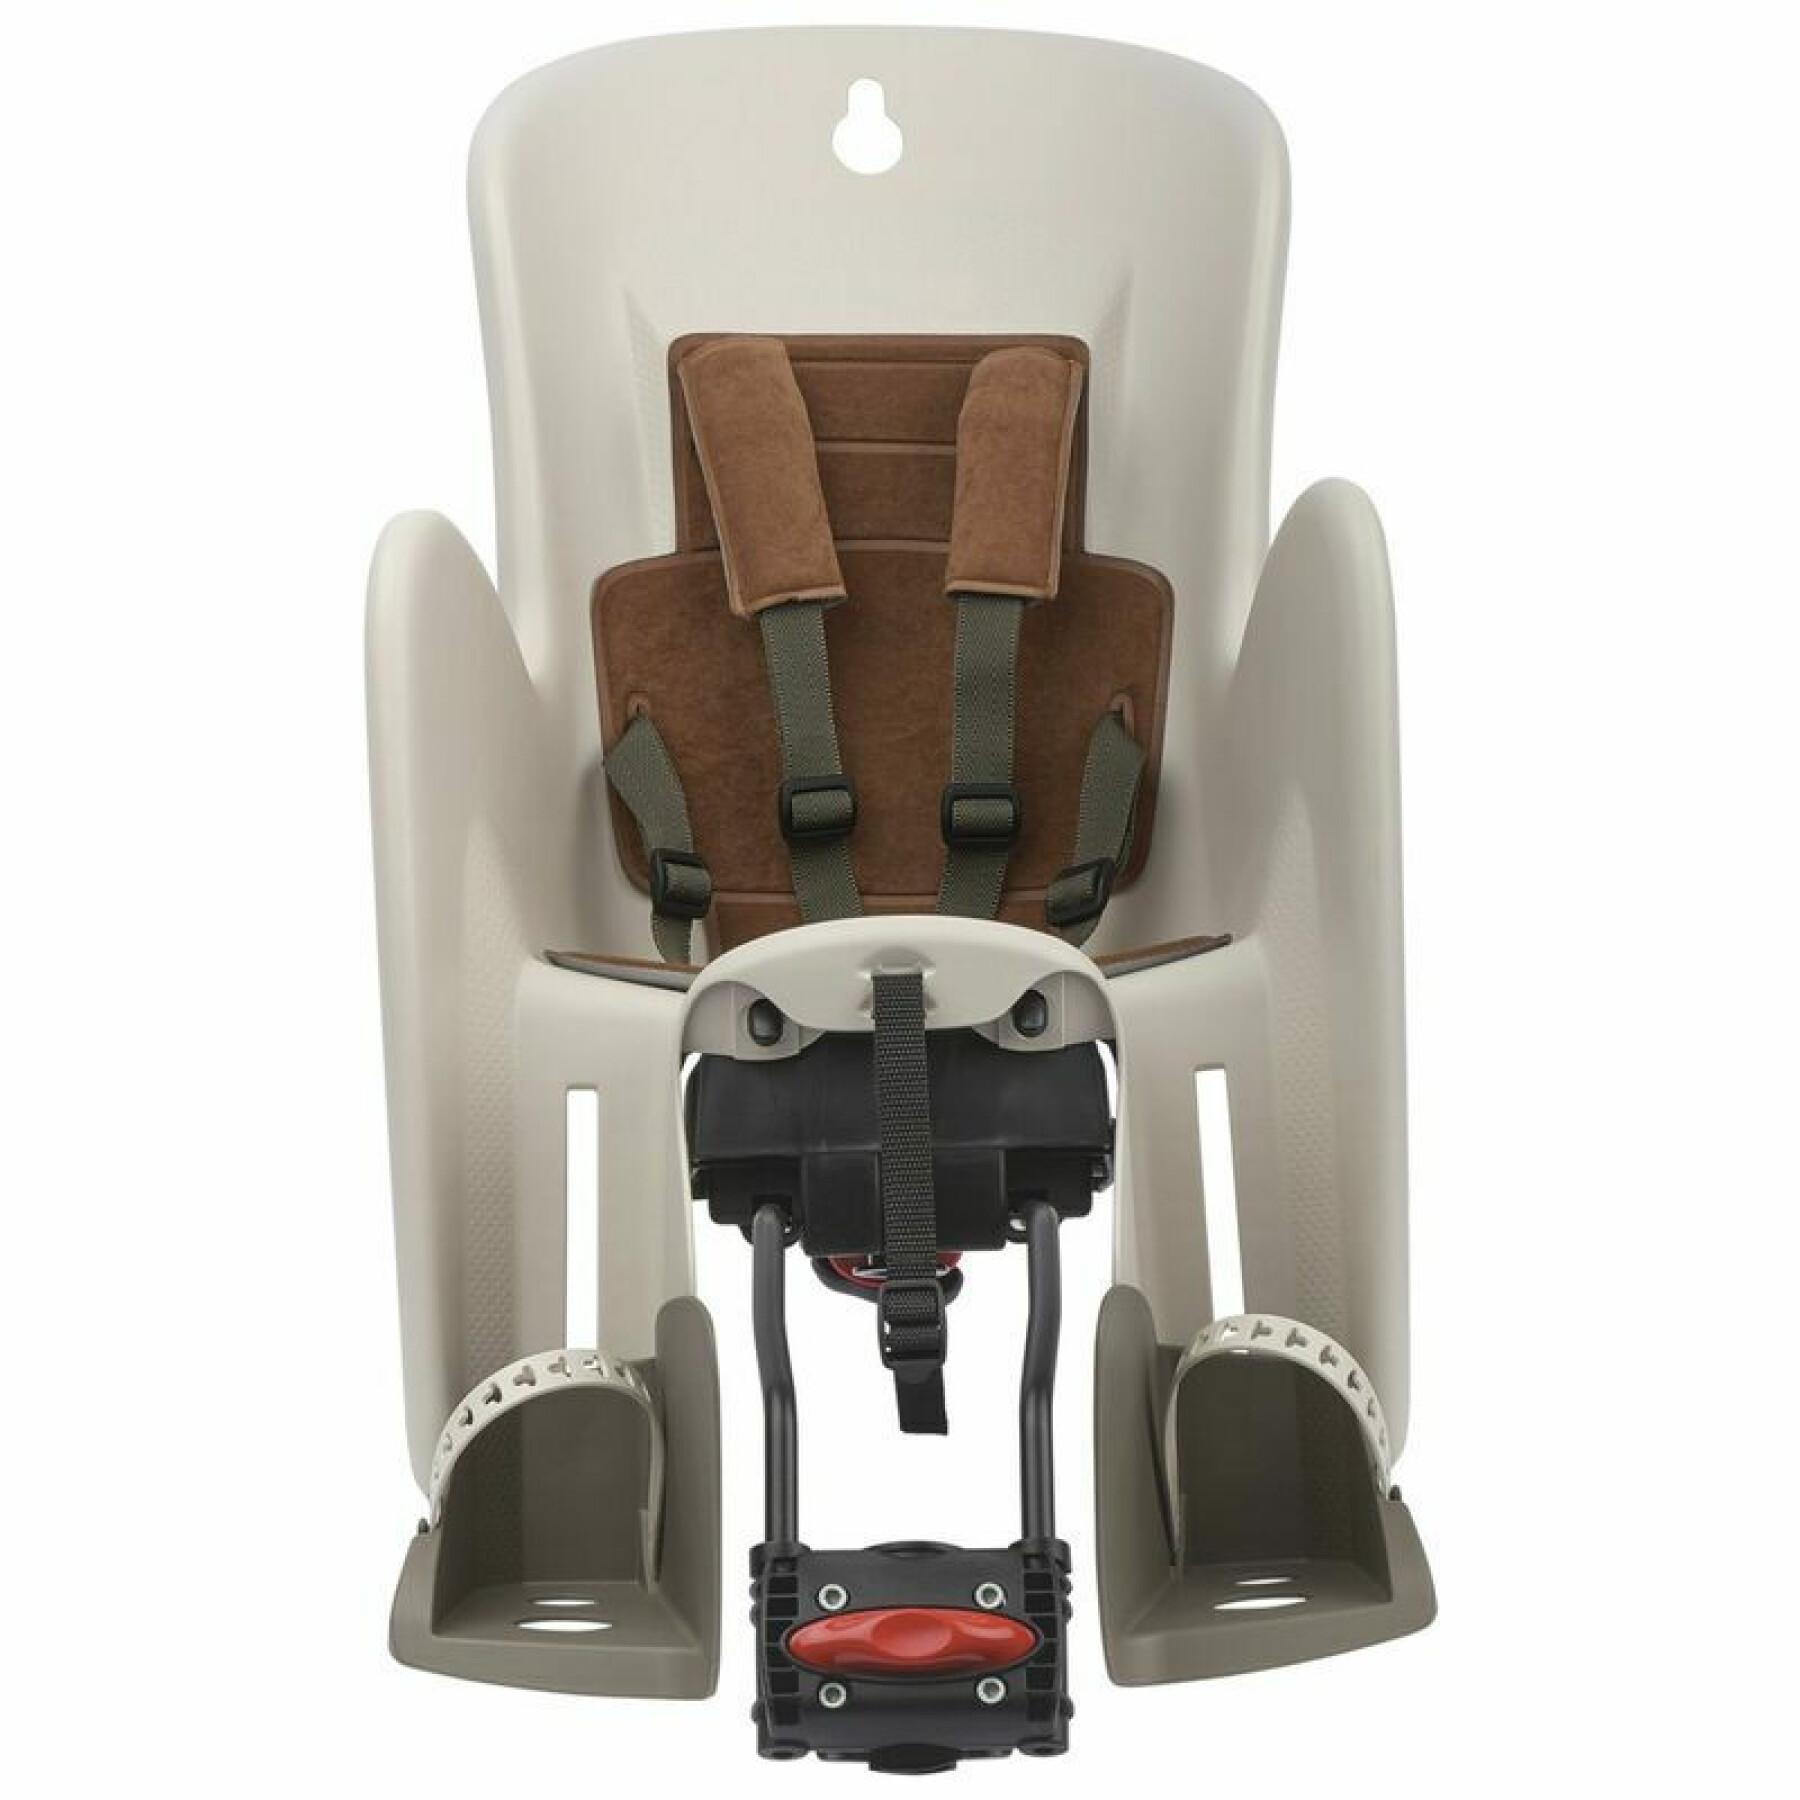 Rückwärts neigbarer Fahrradsitz mit Kinderrahmenbefestigung Polisport Bilby Maxi RS